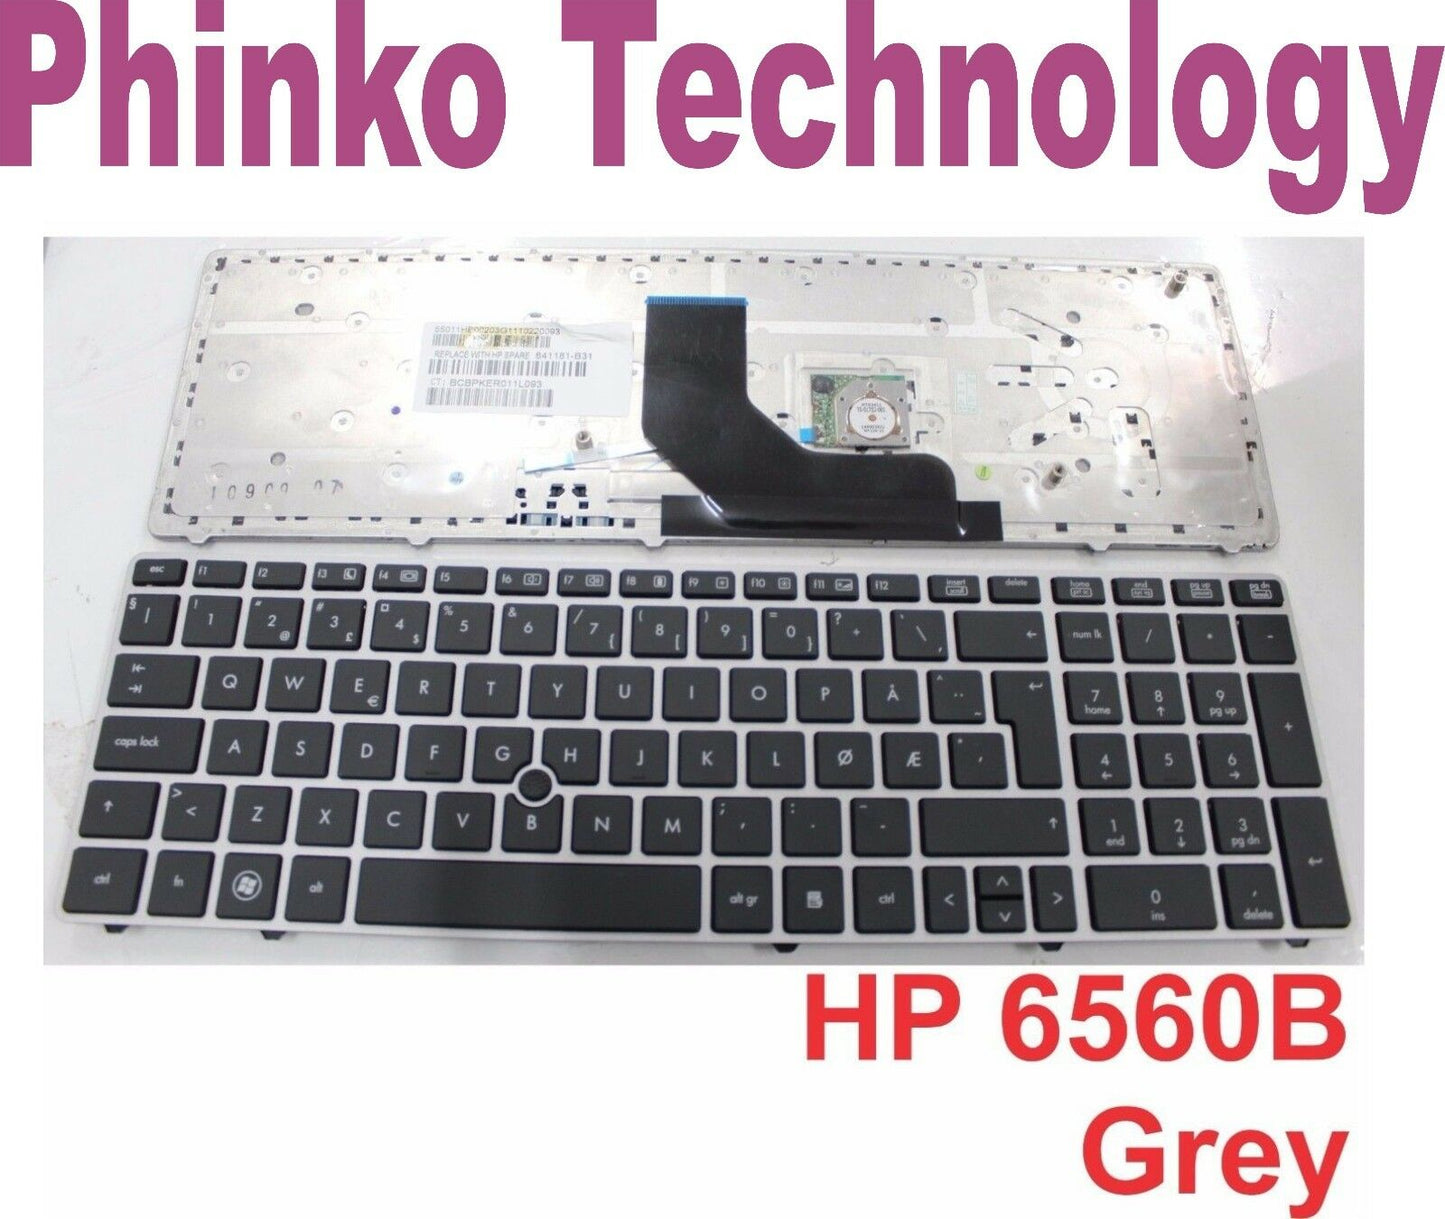 Brand New Keyboard for HP Probook 6560B 6565B 6570B 6575b w/o Point Stick Grey